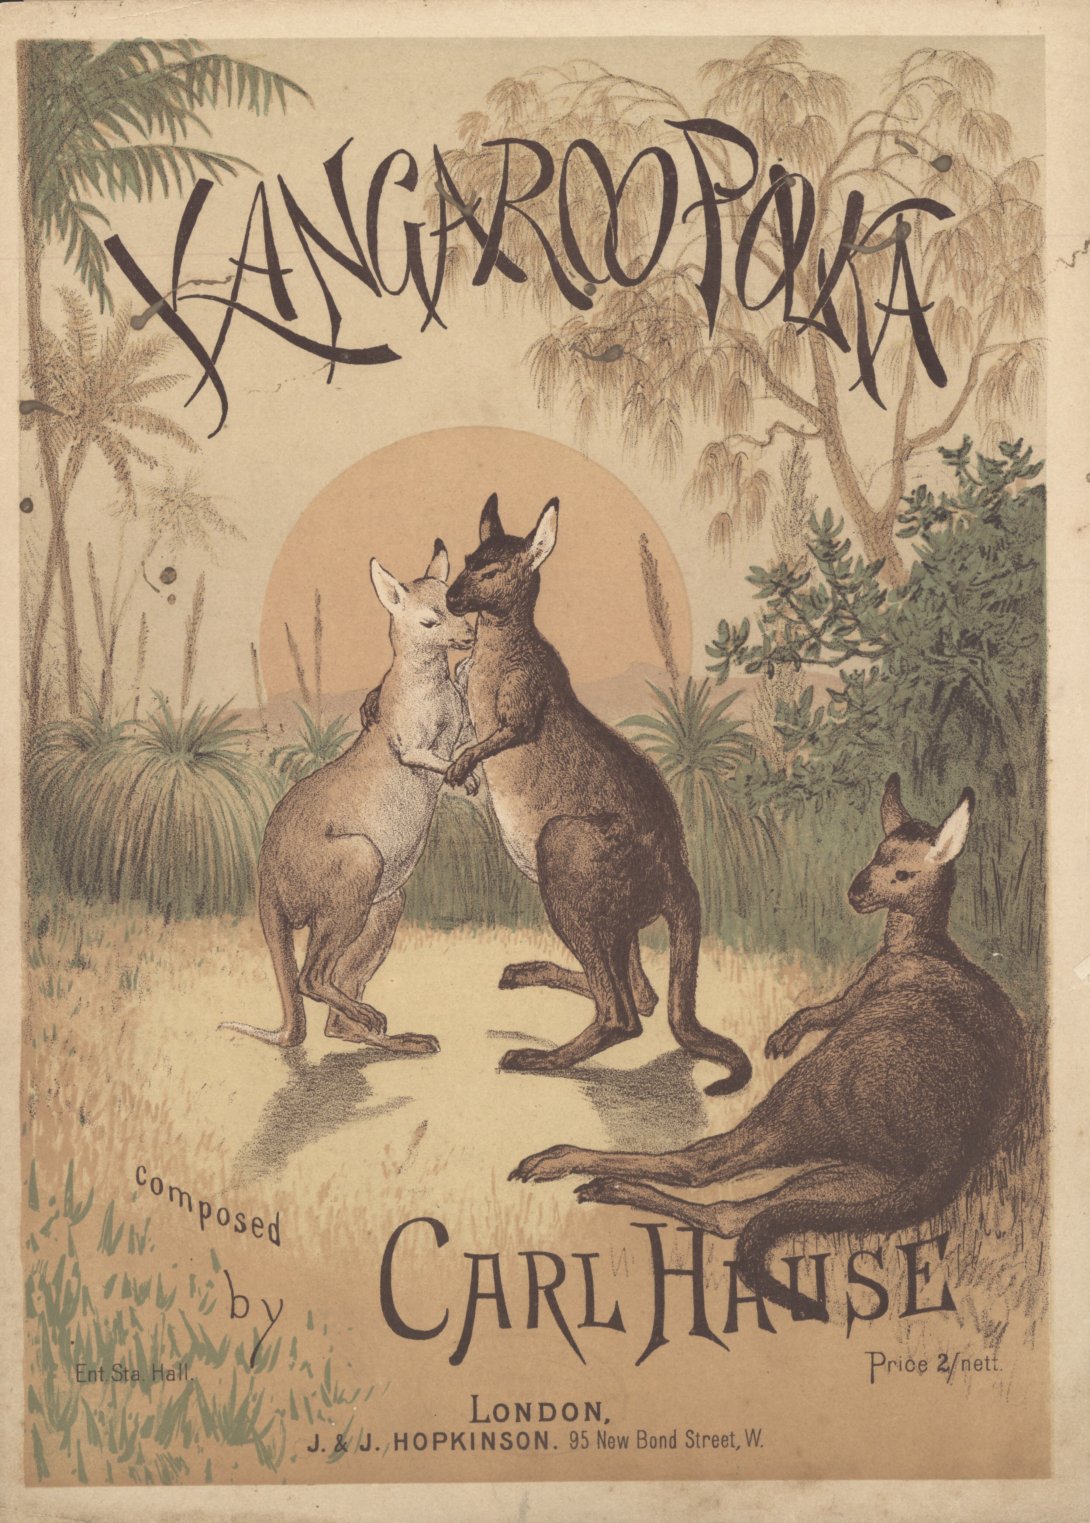 Sheet music illustration featuring three kangaroos